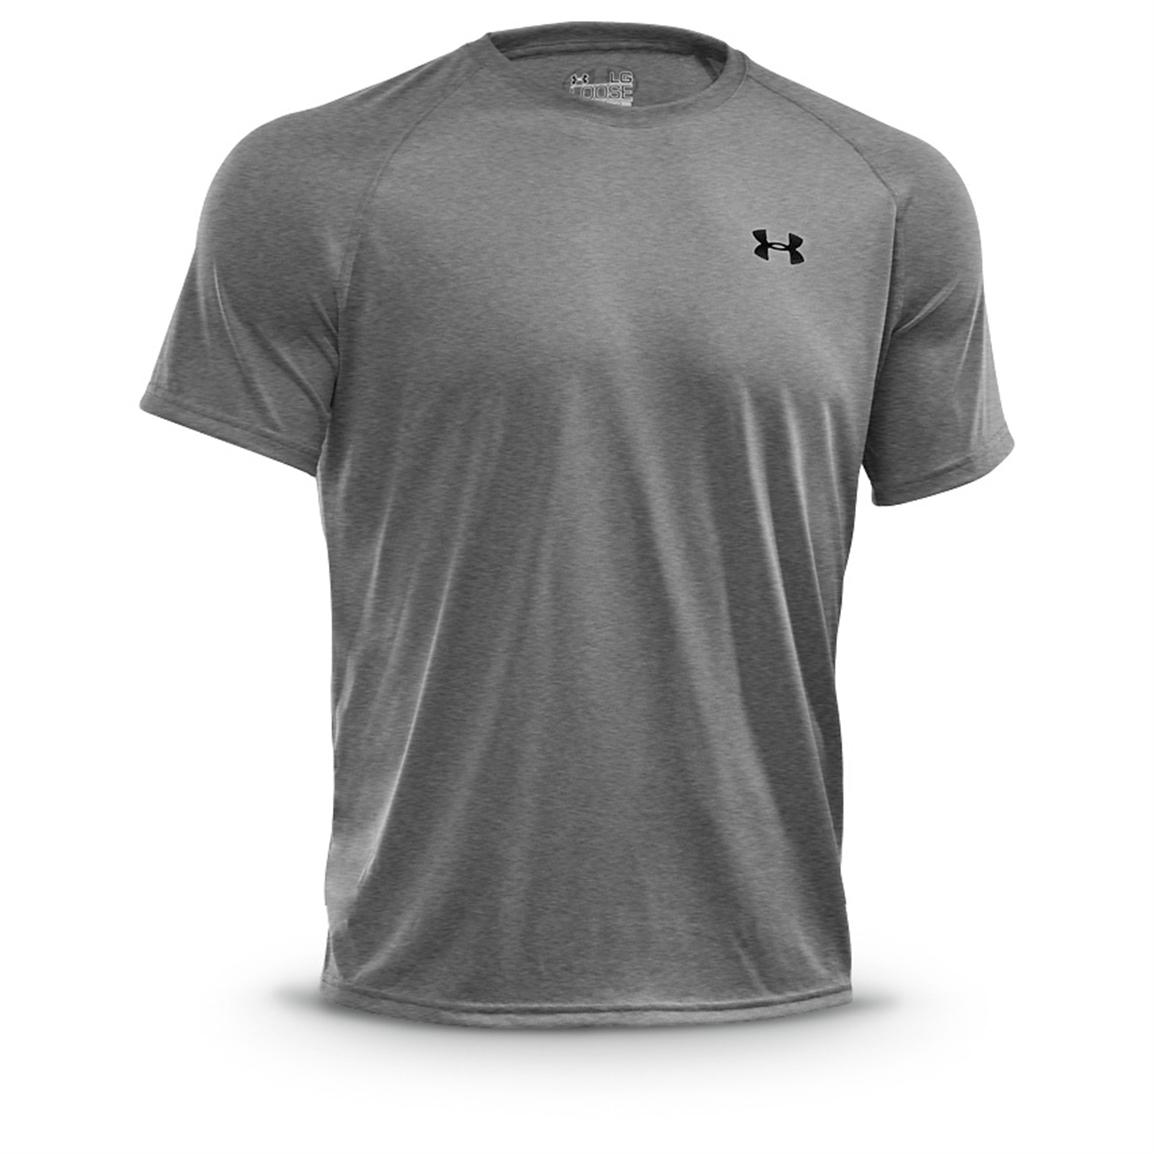 grey under armour t shirt